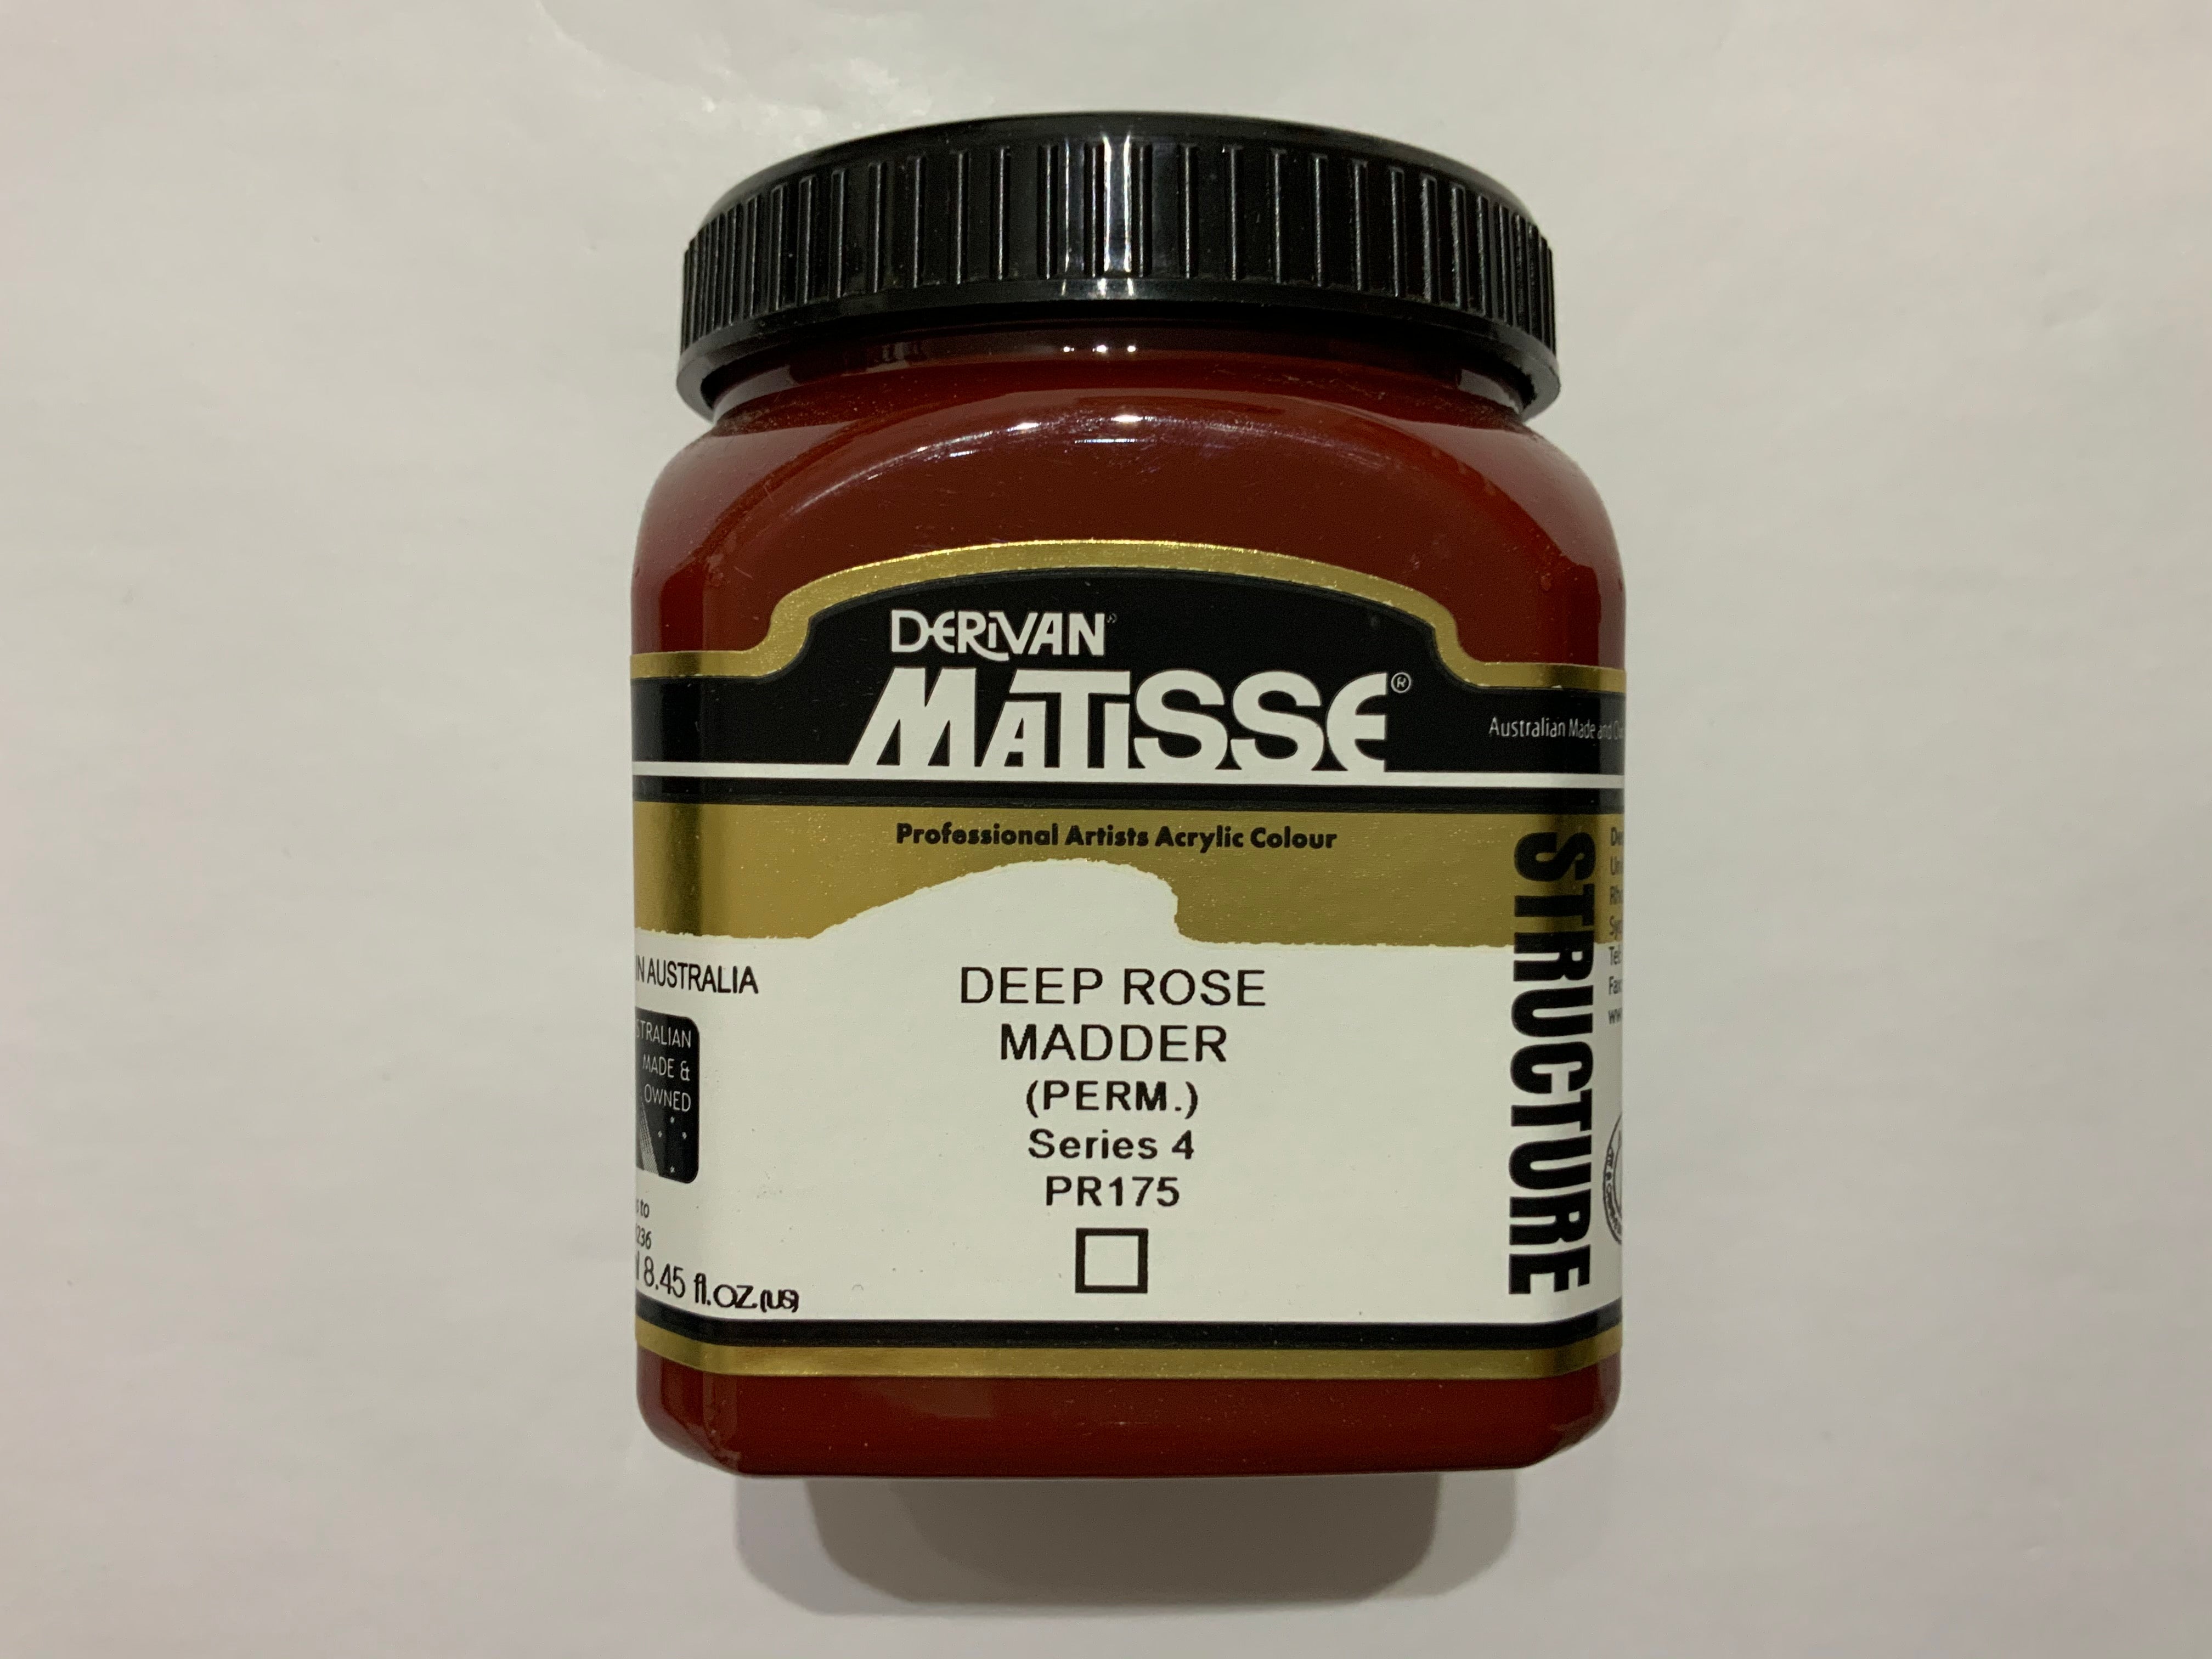 Matisse Acrylic Paint - Deep Rose Madder (PERM)